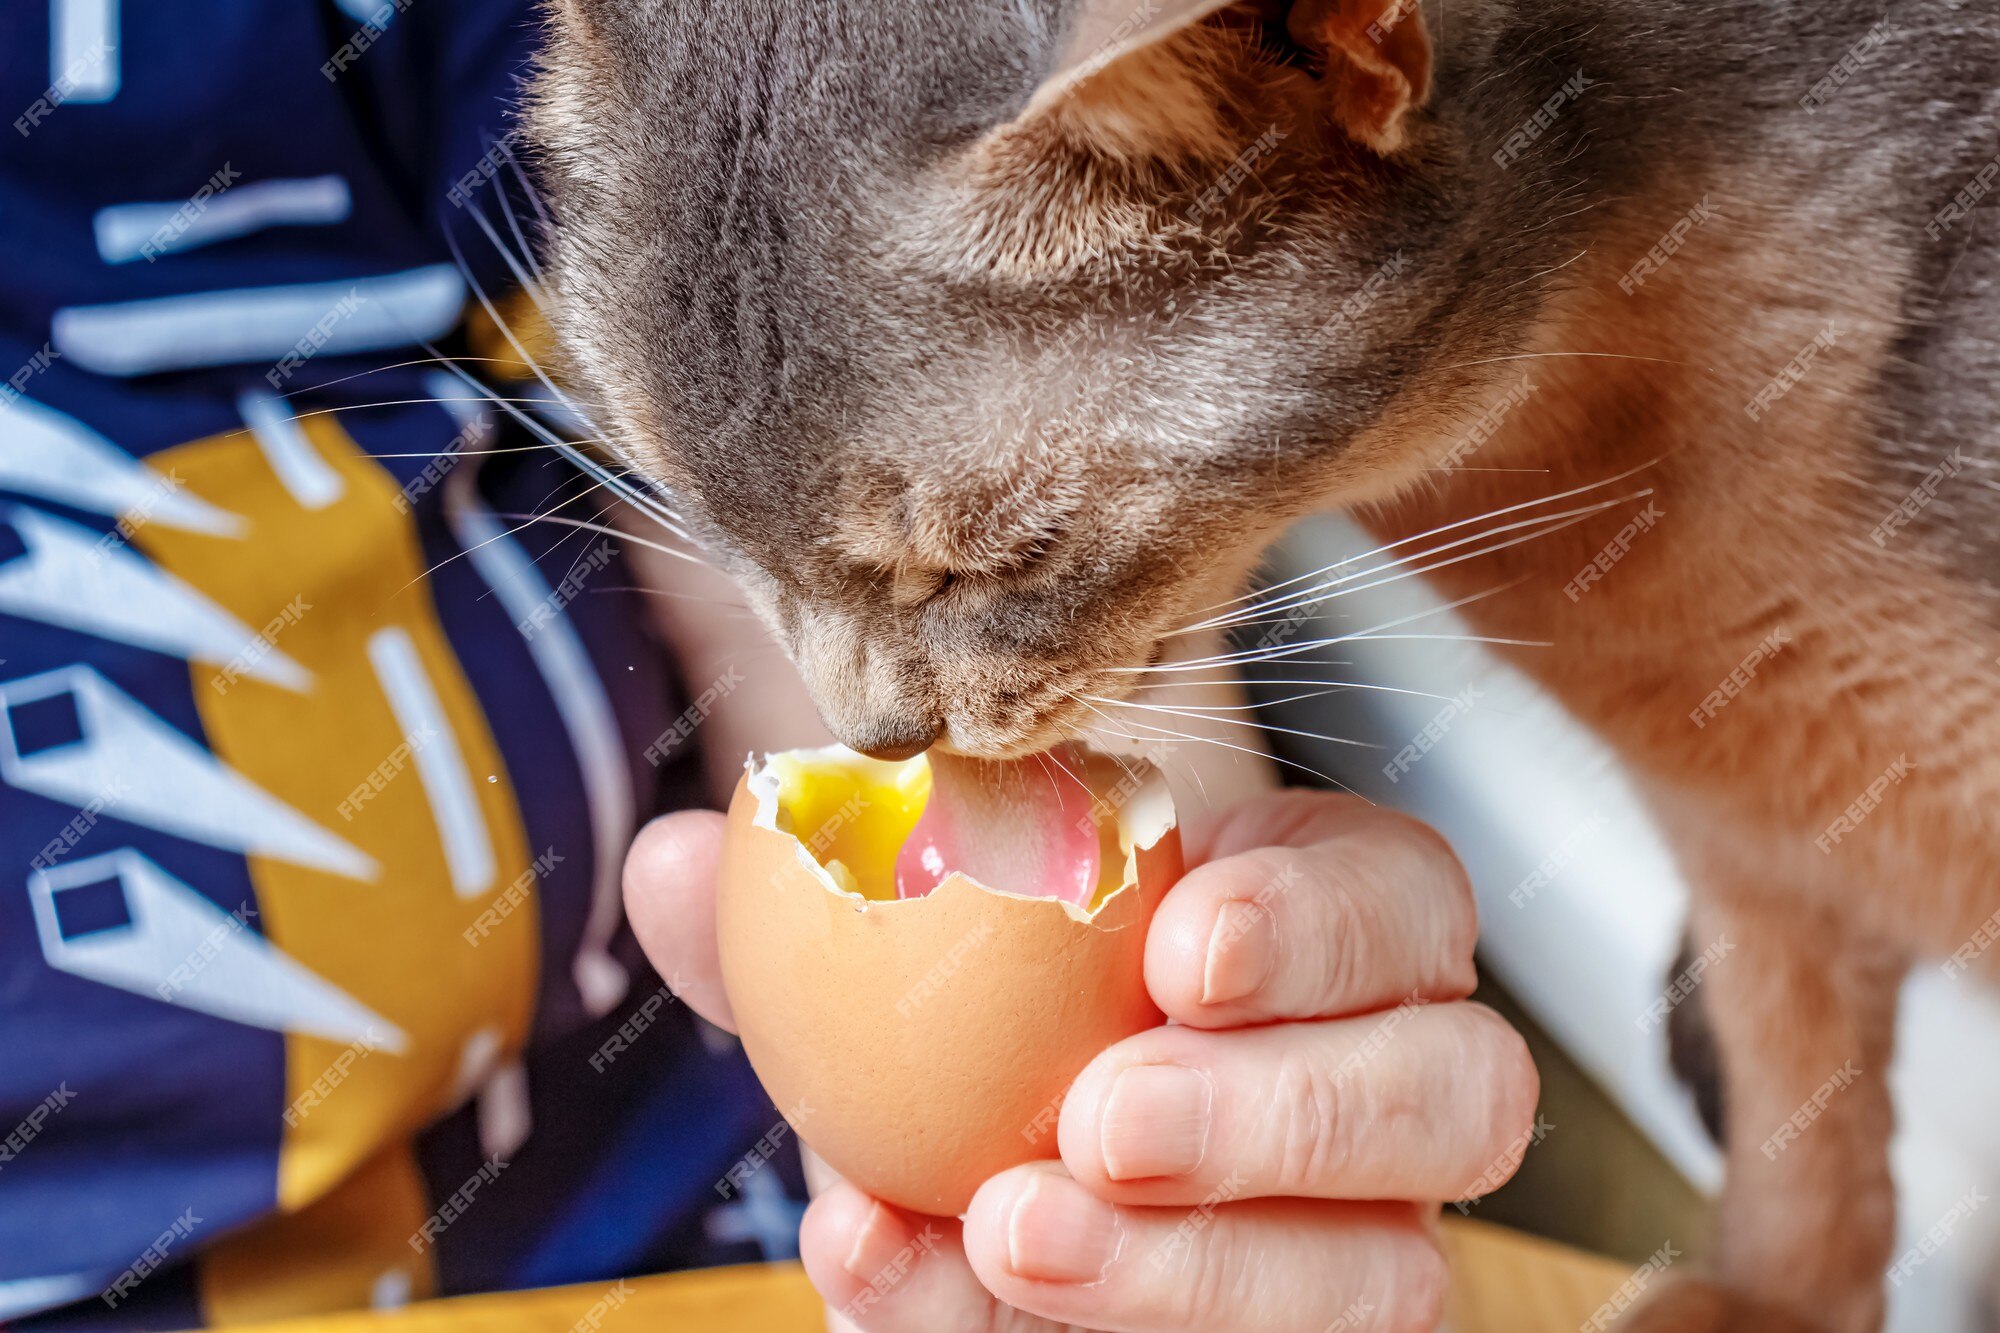 erven Duizeligheid Raap bladeren op Premium Photo | Abyssinian cat lapping tongue liquid yolk of boiled chicken  egg